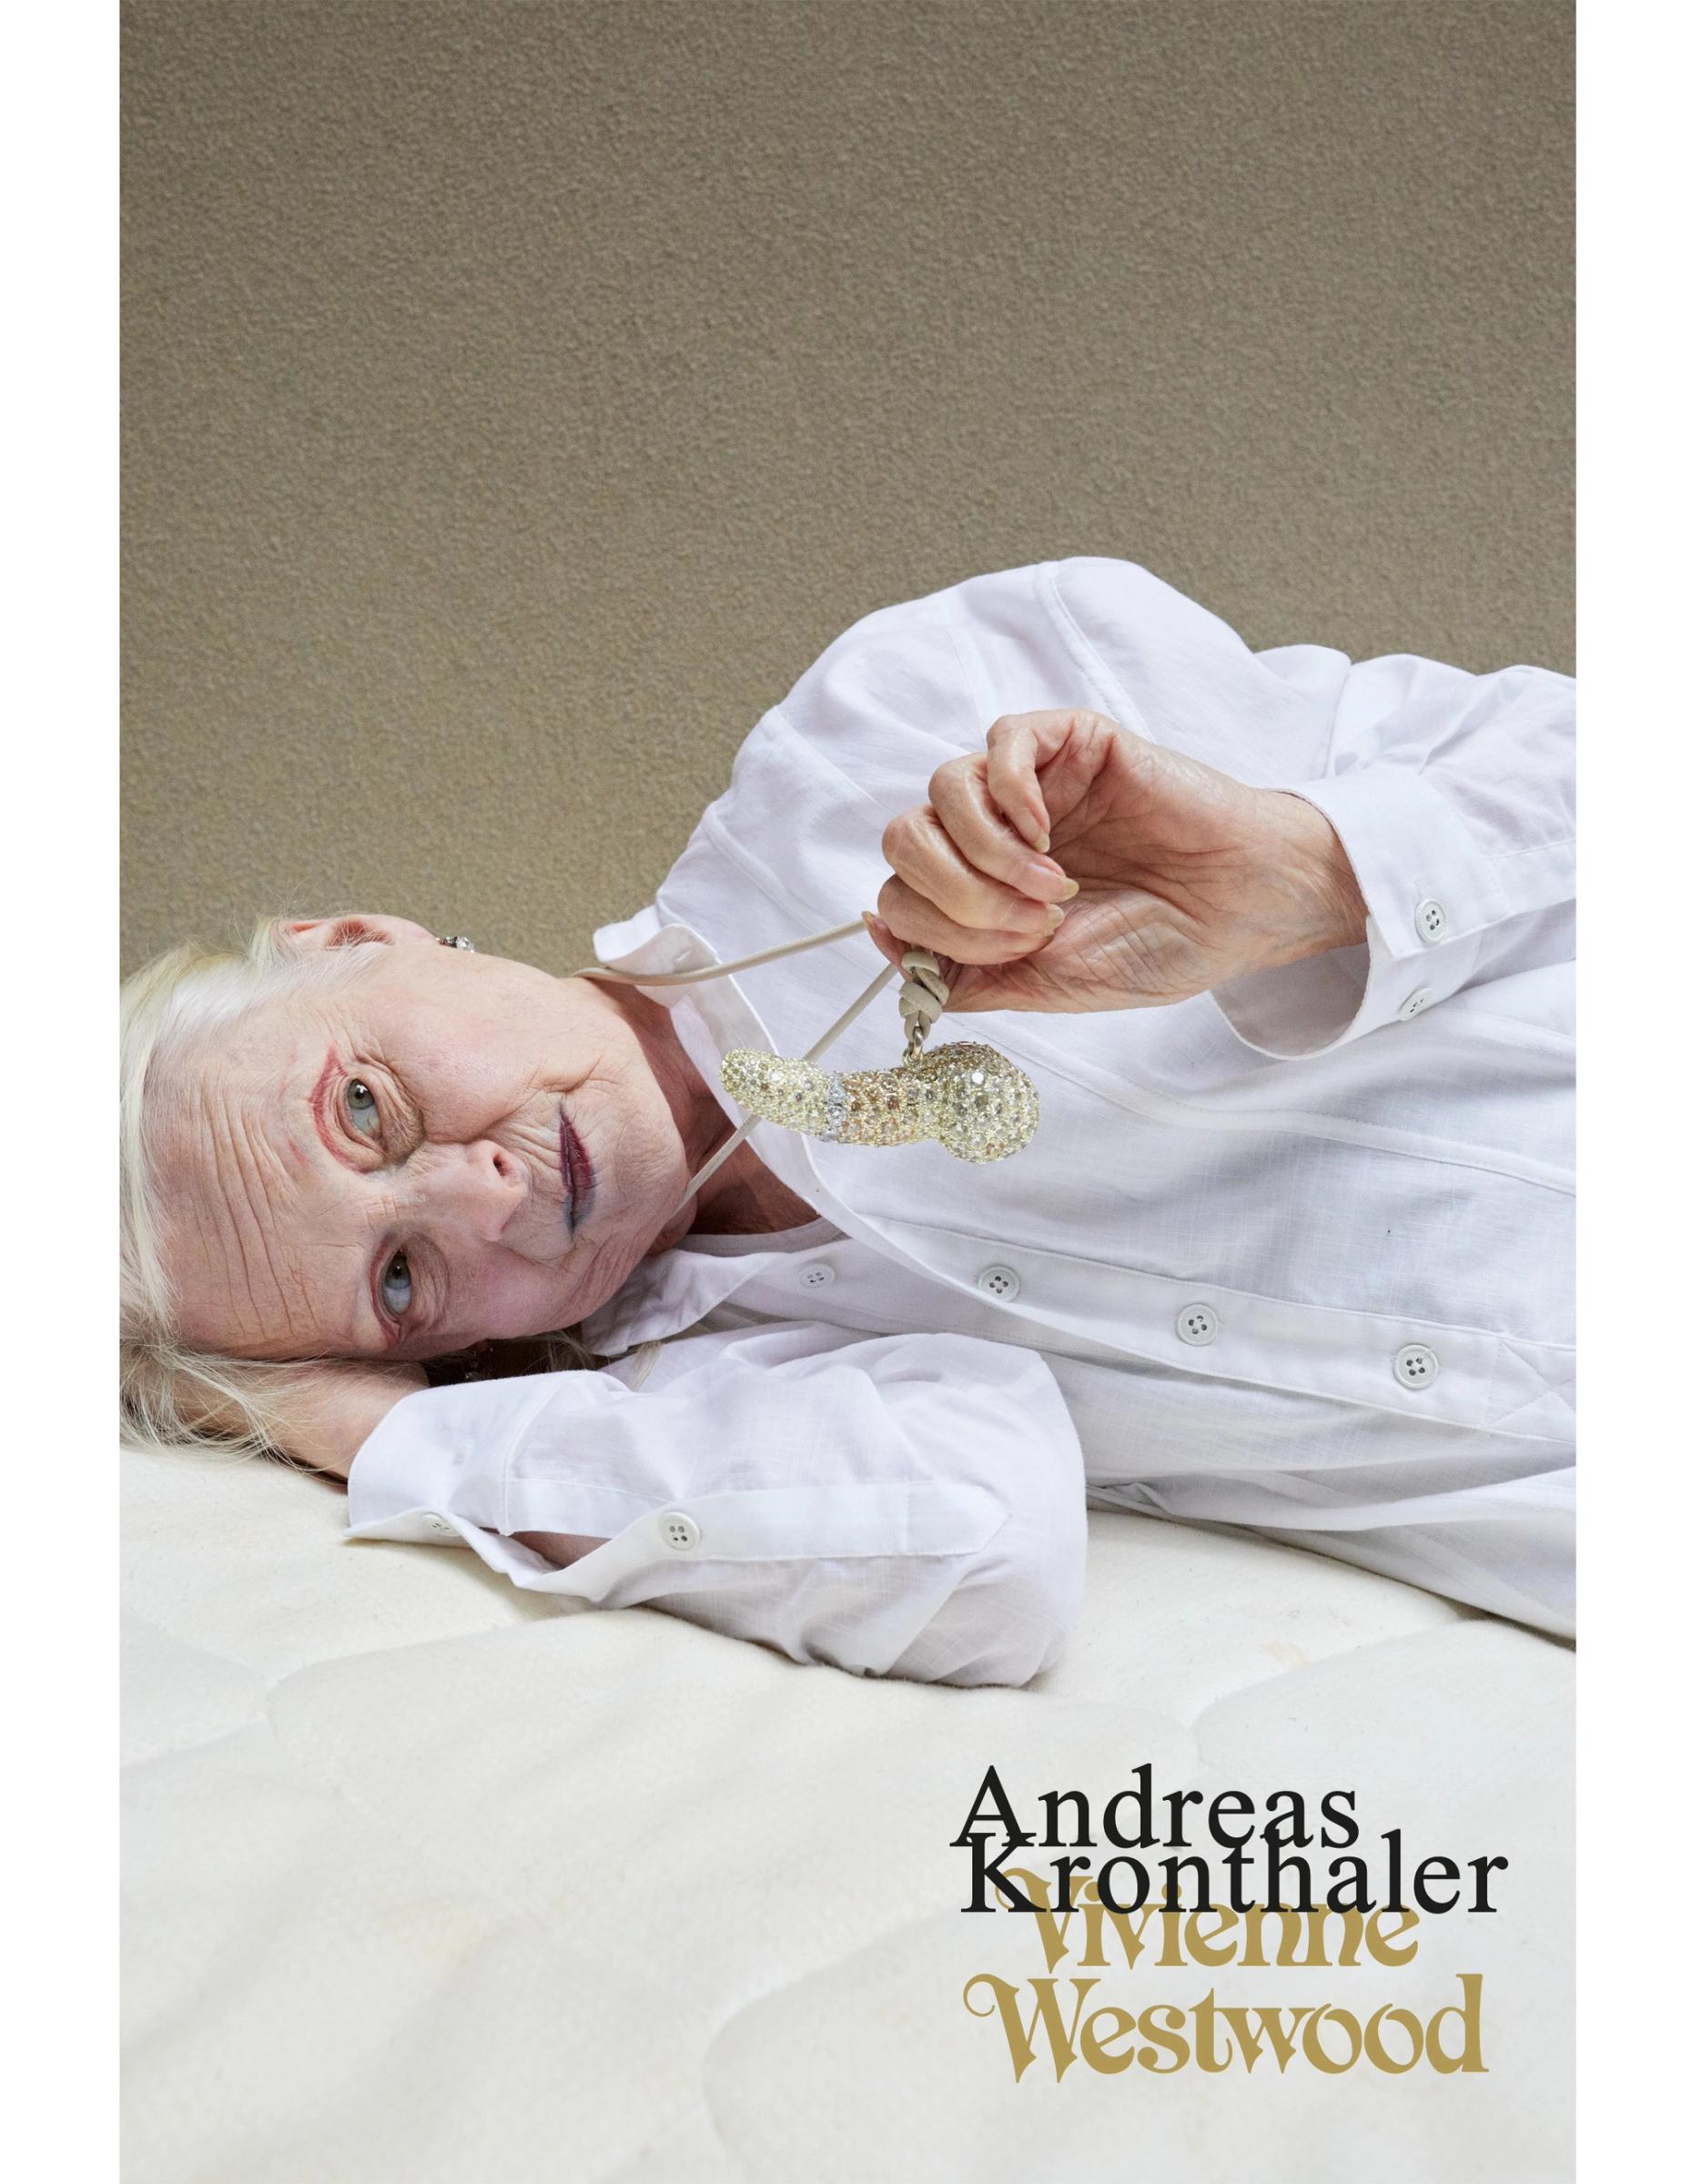 Andreas Kronthaler for Vivienne Westwood S/S 2018 - juergen teller styled by Sabina Schreder